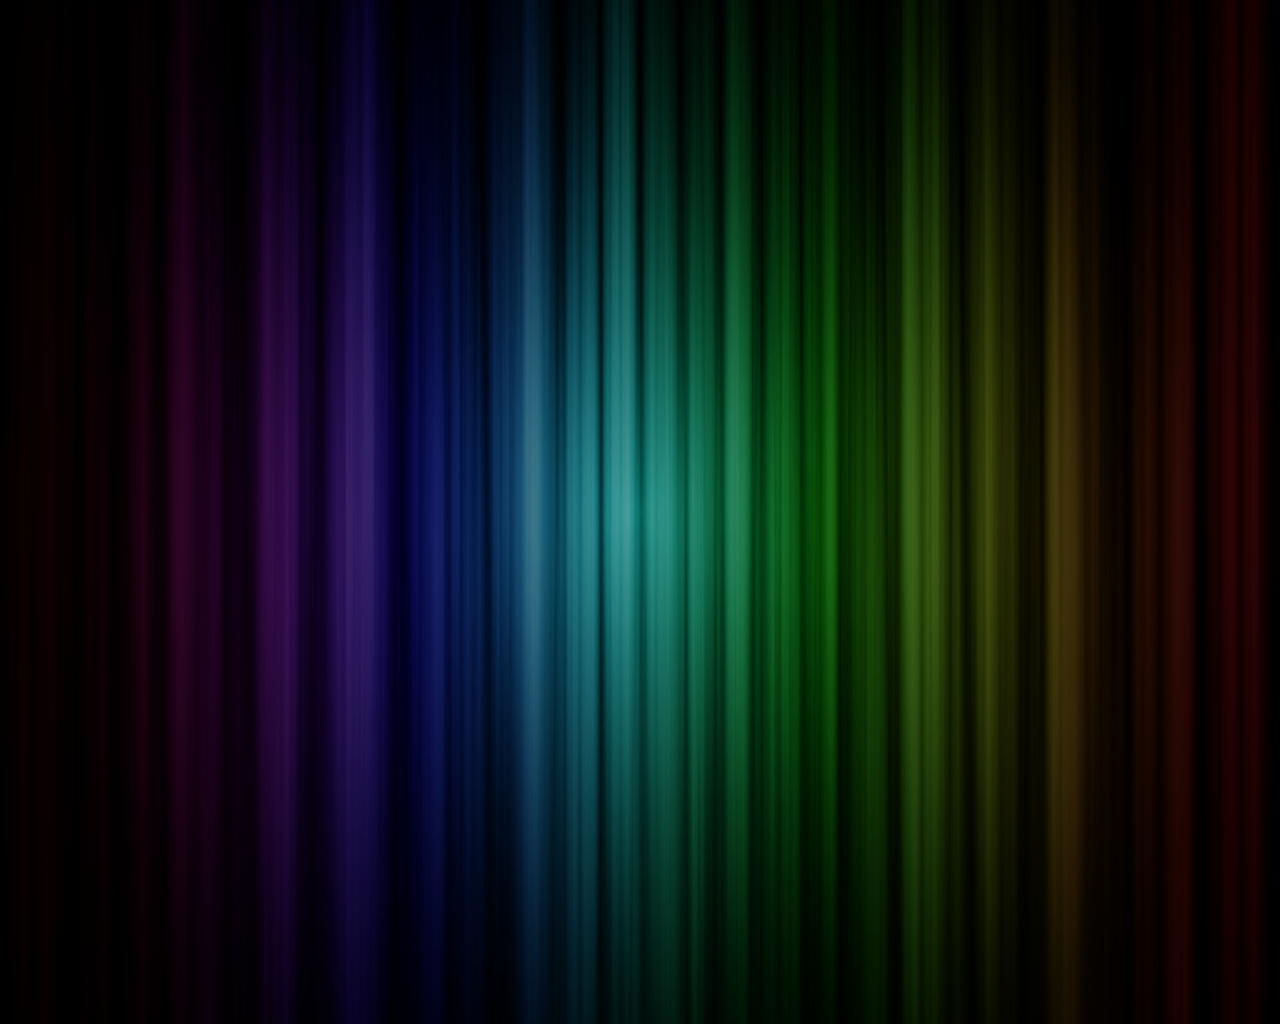 papel pintado warna warni,verde,azul,violeta,negro,púrpura